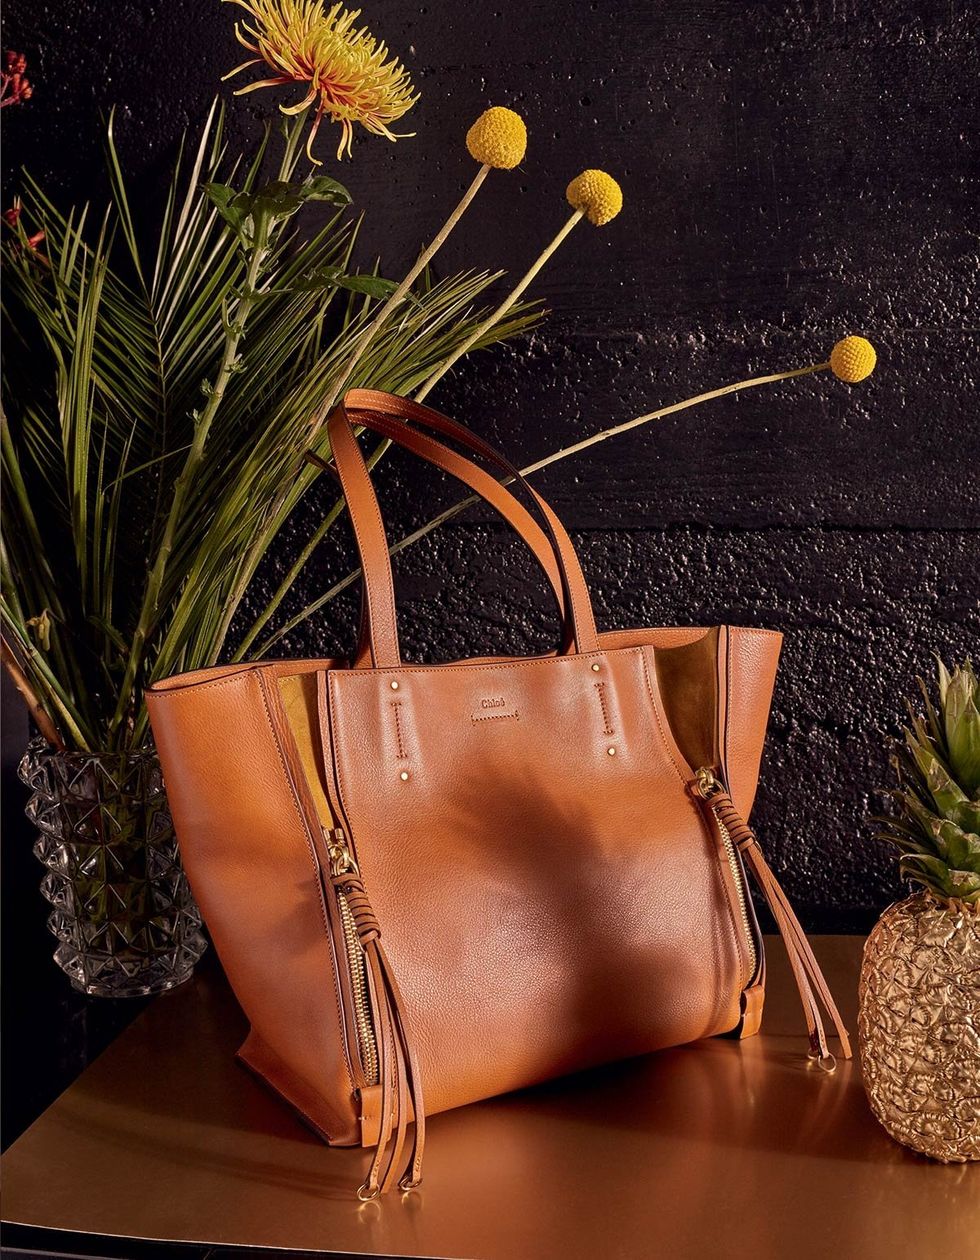 Bag, Shoulder bag, Tan, Still life photography, Leather, Luggage and bags, Flower Arranging, Floral design, Flowering plant, Houseplant, 